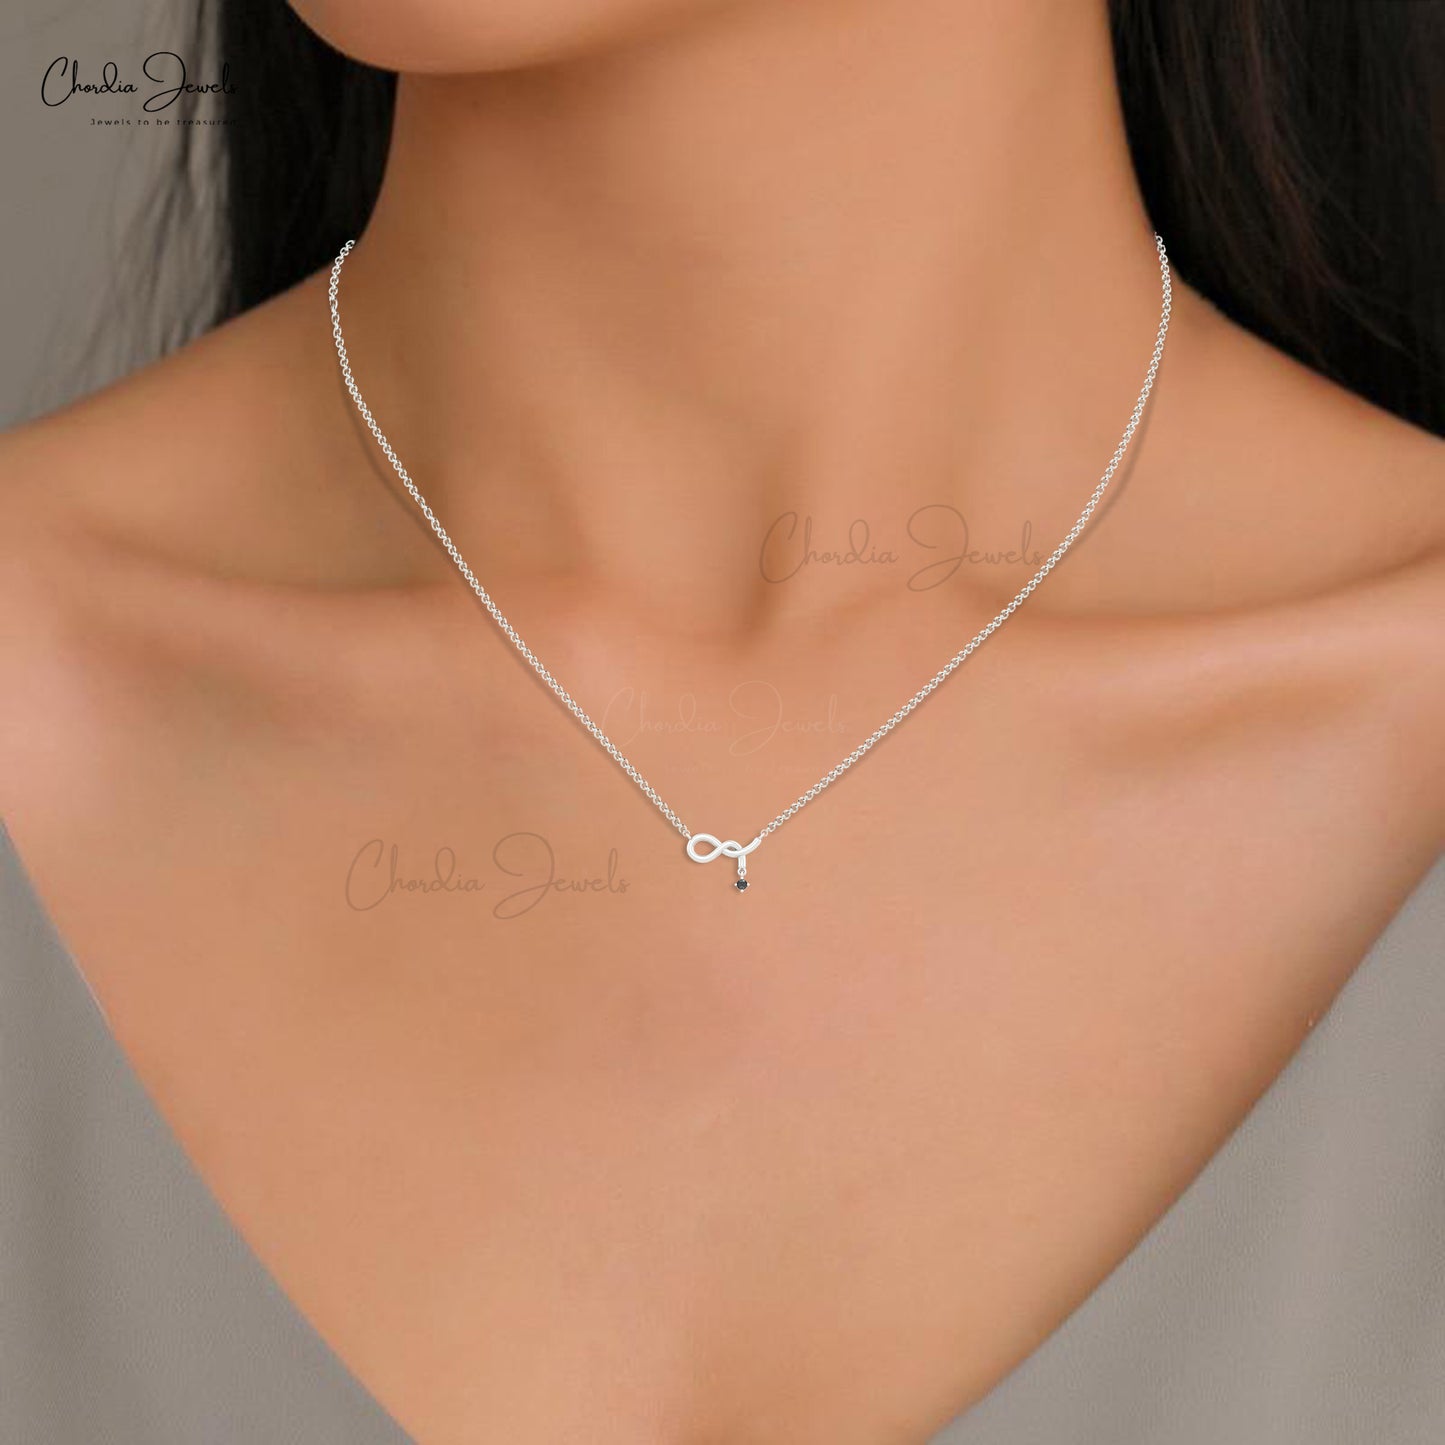 Dazzling 14k Solid Gold Infinity Necklace Genuine 0.11ct Black Diamond Birthstone Pendant